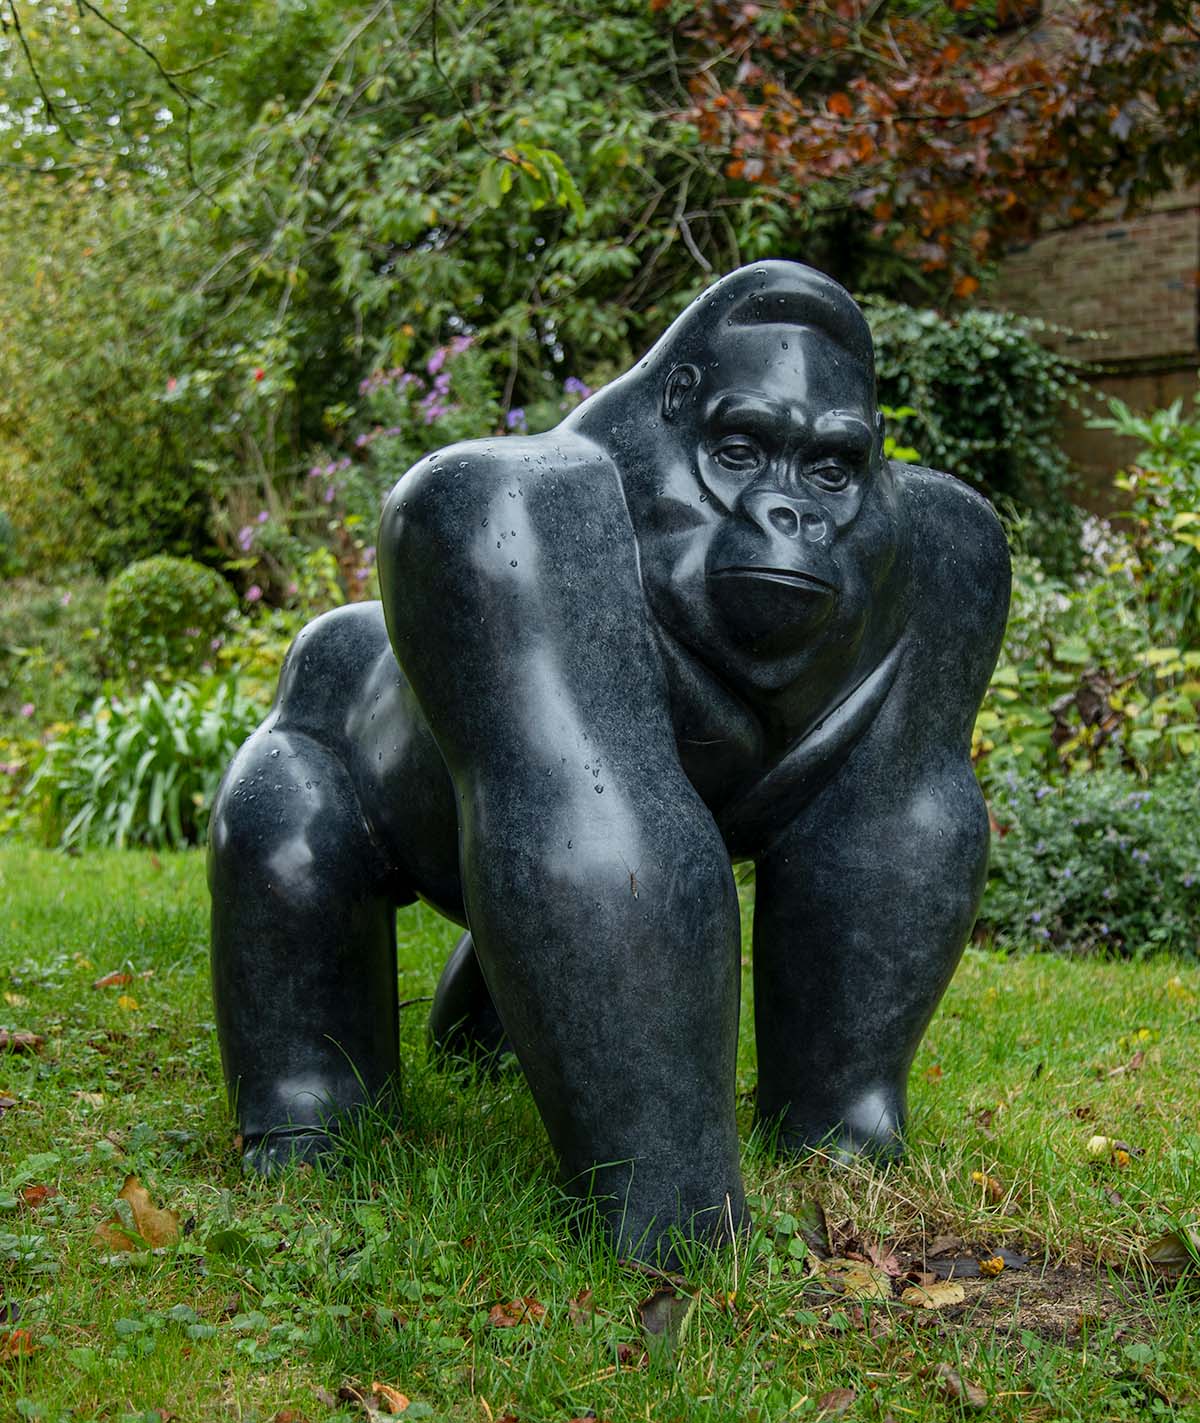 Sculpture of gorilla in the garden, by Michael Cooper.